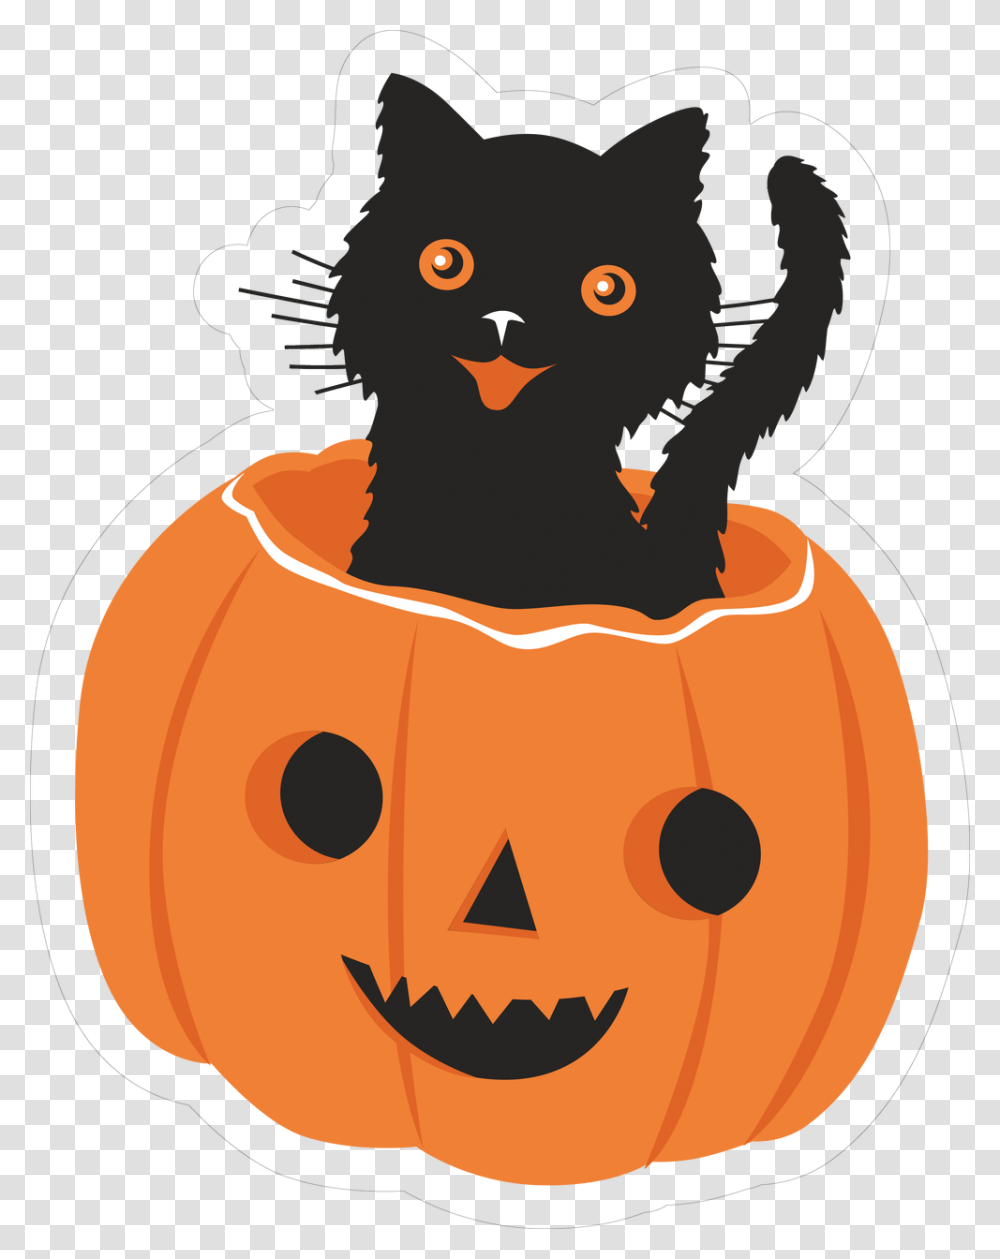 Cat In Pumpkin Print Amp Cut File Pumpkin Images To Print, Vegetable, Plant, Food, Halloween Transparent Png